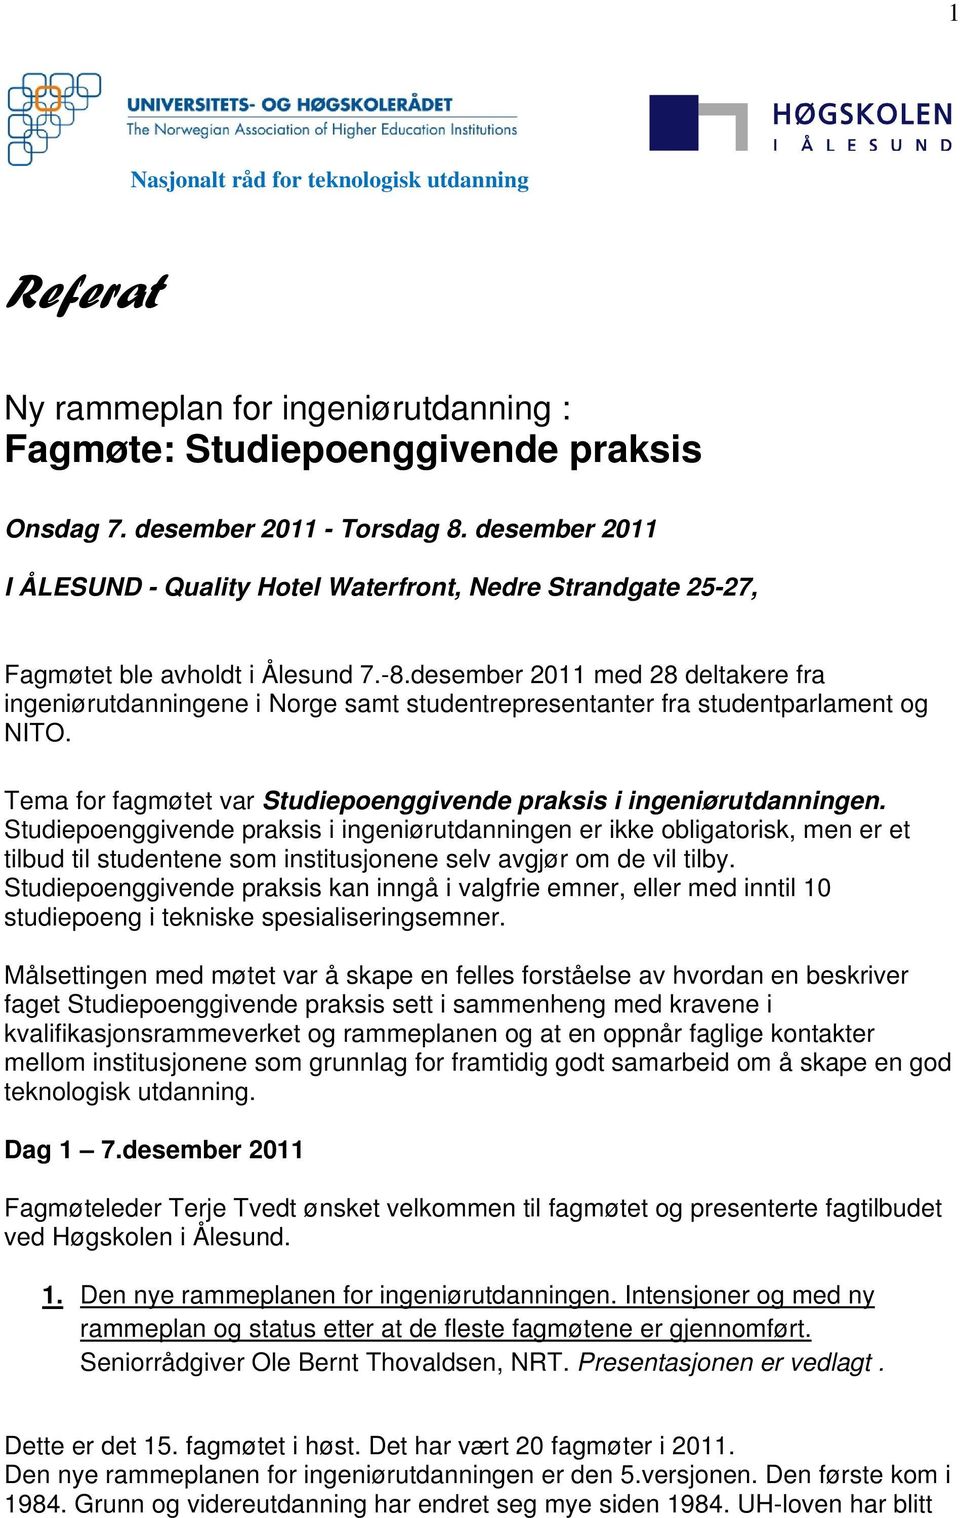 desember 2011 med 28 deltakere fra ingeniørutdanningene i Norge samt studentrepresentanter fra studentparlament og NITO. Tema for fagmøtet var Studiepoenggivende praksis i ingeniørutdanningen.